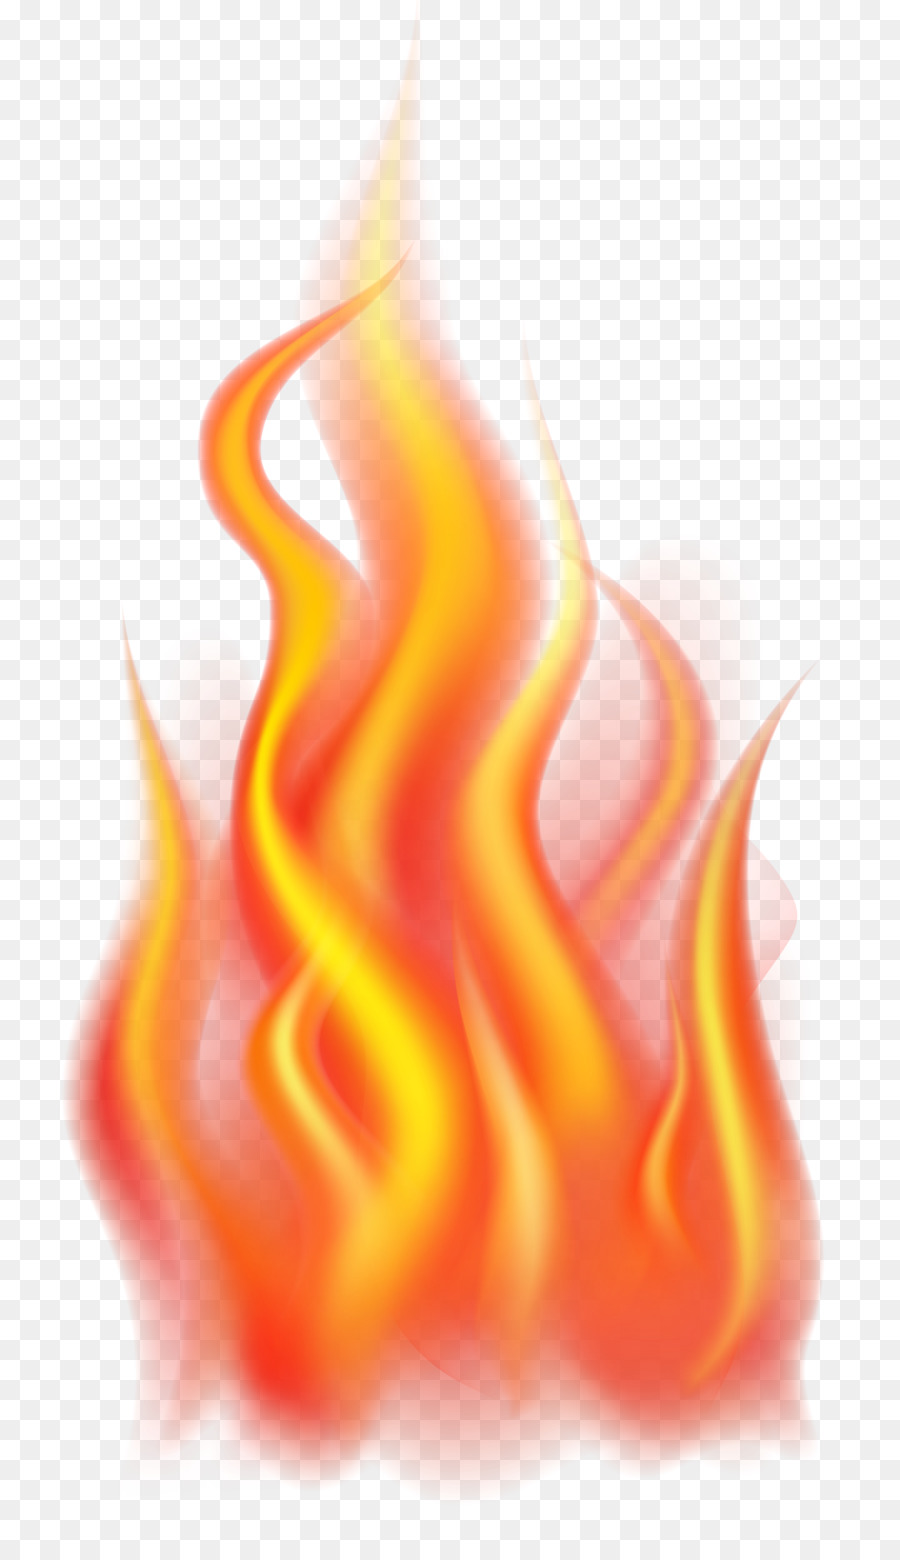 Flame Desktop Wallpaper Fire - flame png download - 4642*8000 - Free Transparent Flame png Download.